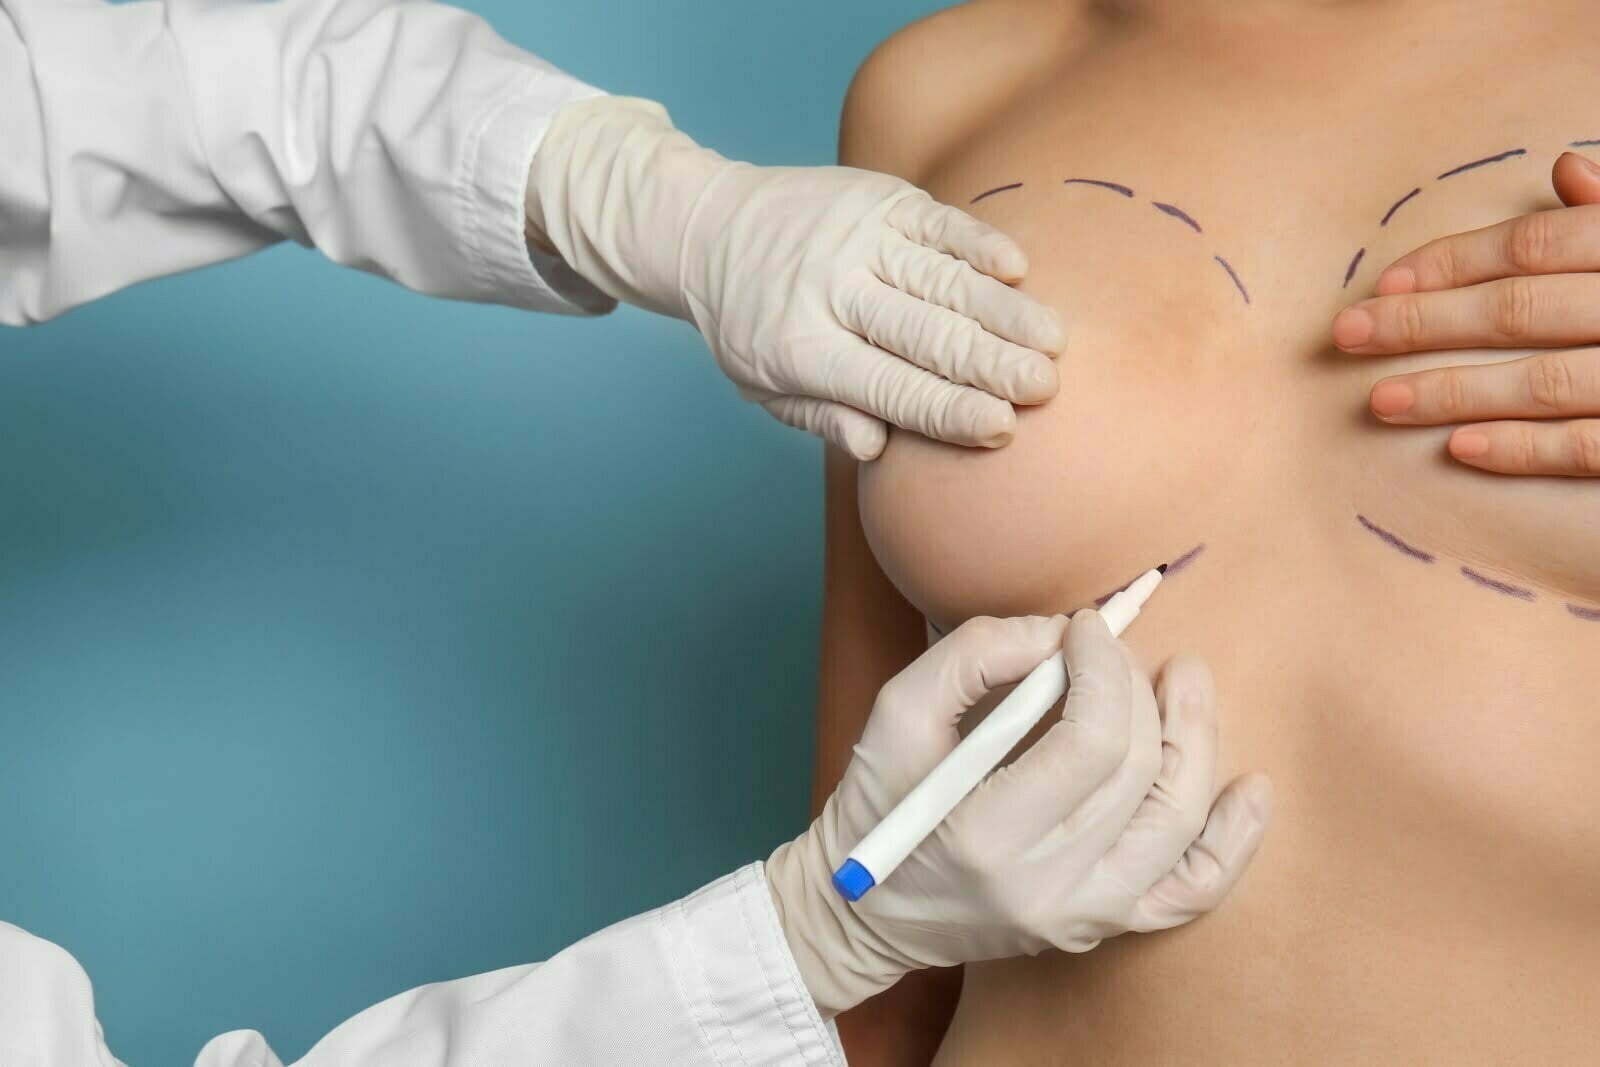 Female breast reduction in Ireland